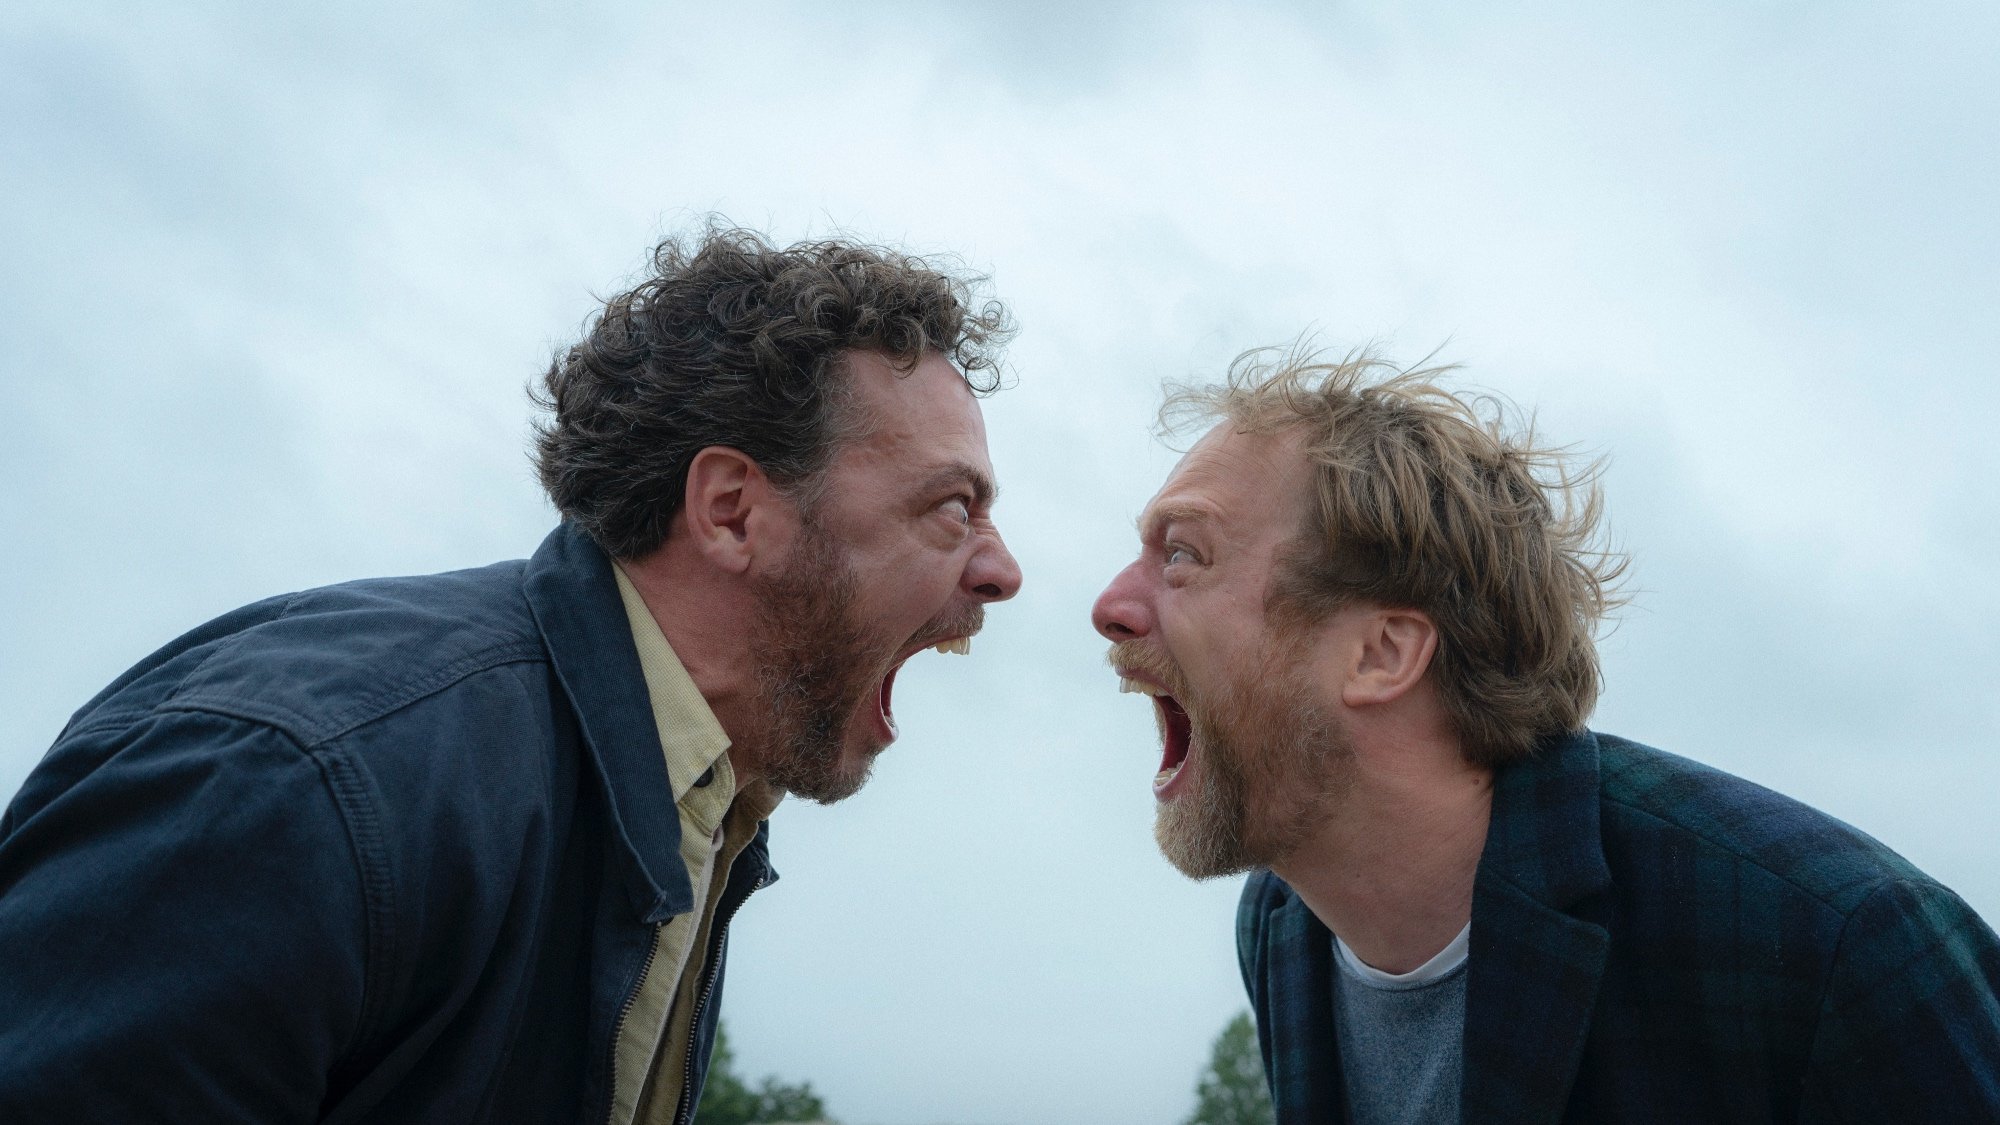 'Speak No Evil' Fedja van Huêt as Patrick and Morten Burian as Bjørn screaming in each other's faces wearing jackets